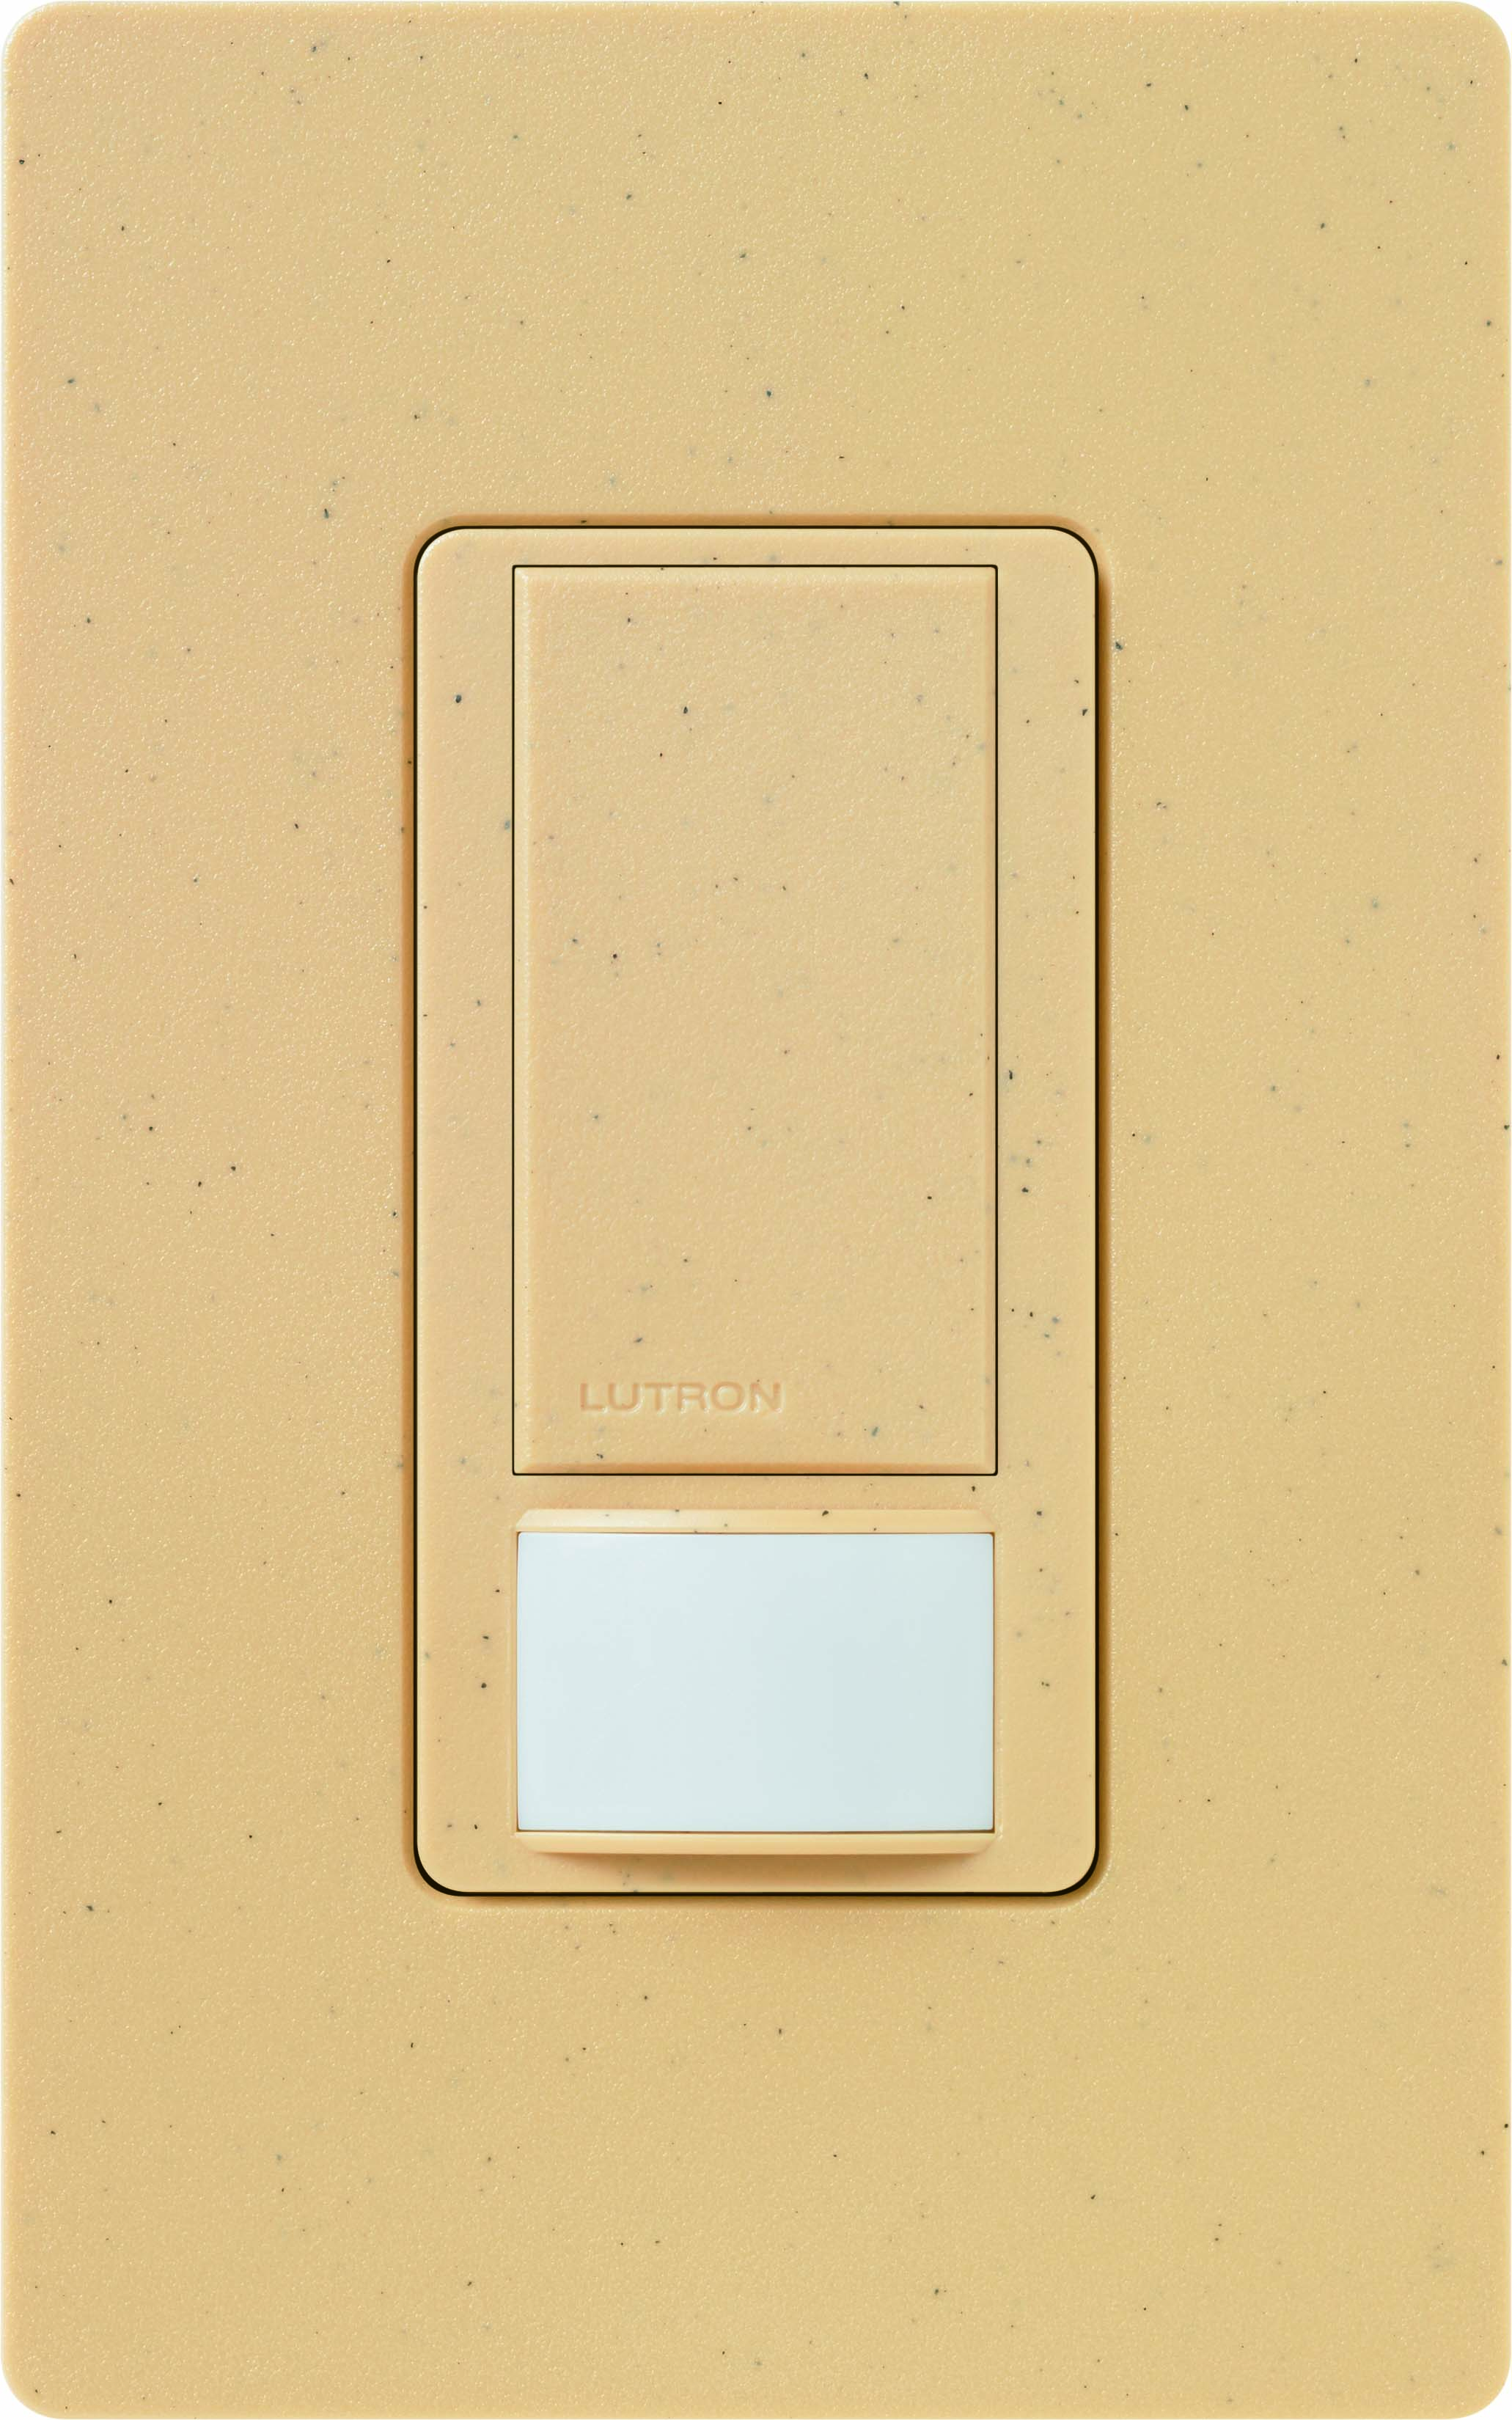 Maestro Occupancy-Sensing Switch, Single-pole, 120V/2A in goldstone